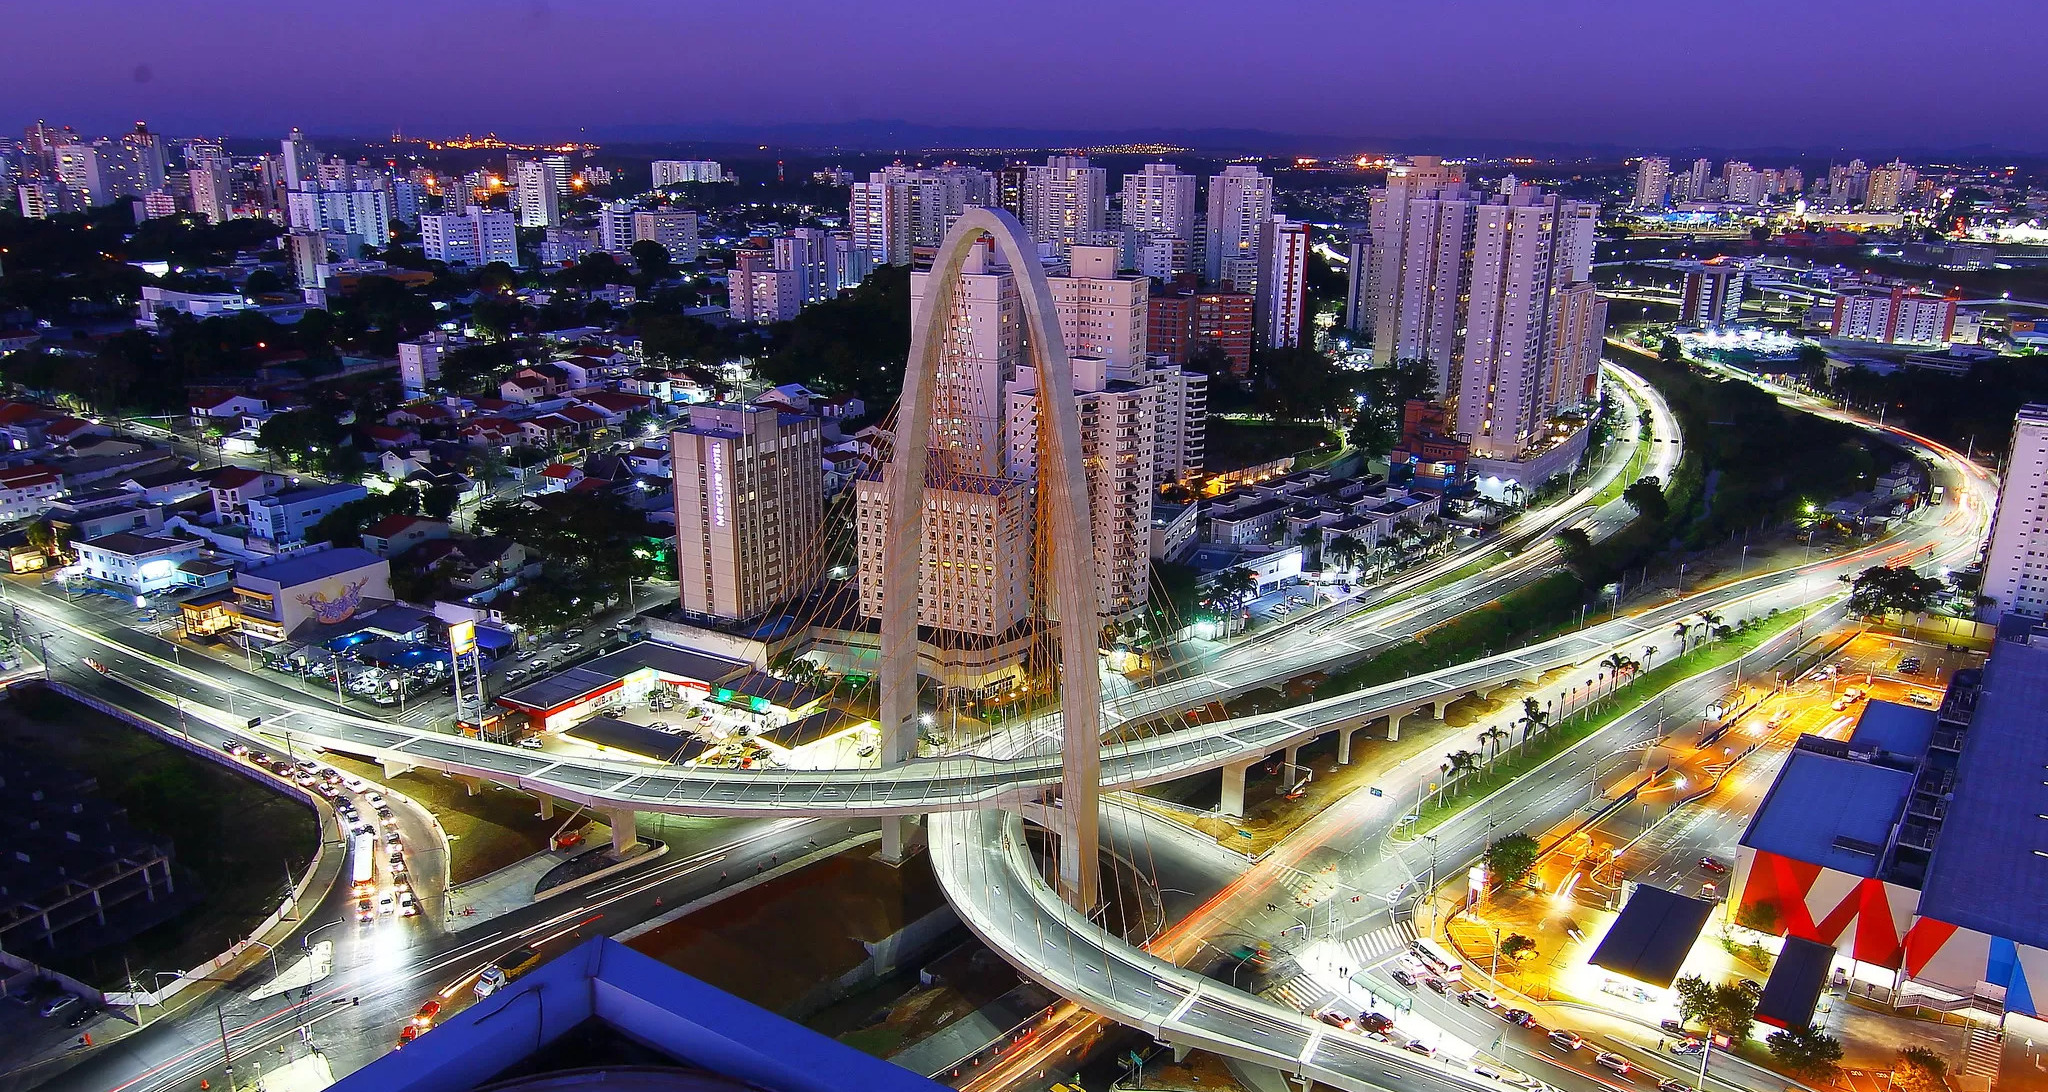 Sao Paulo, History, Population, & Facts